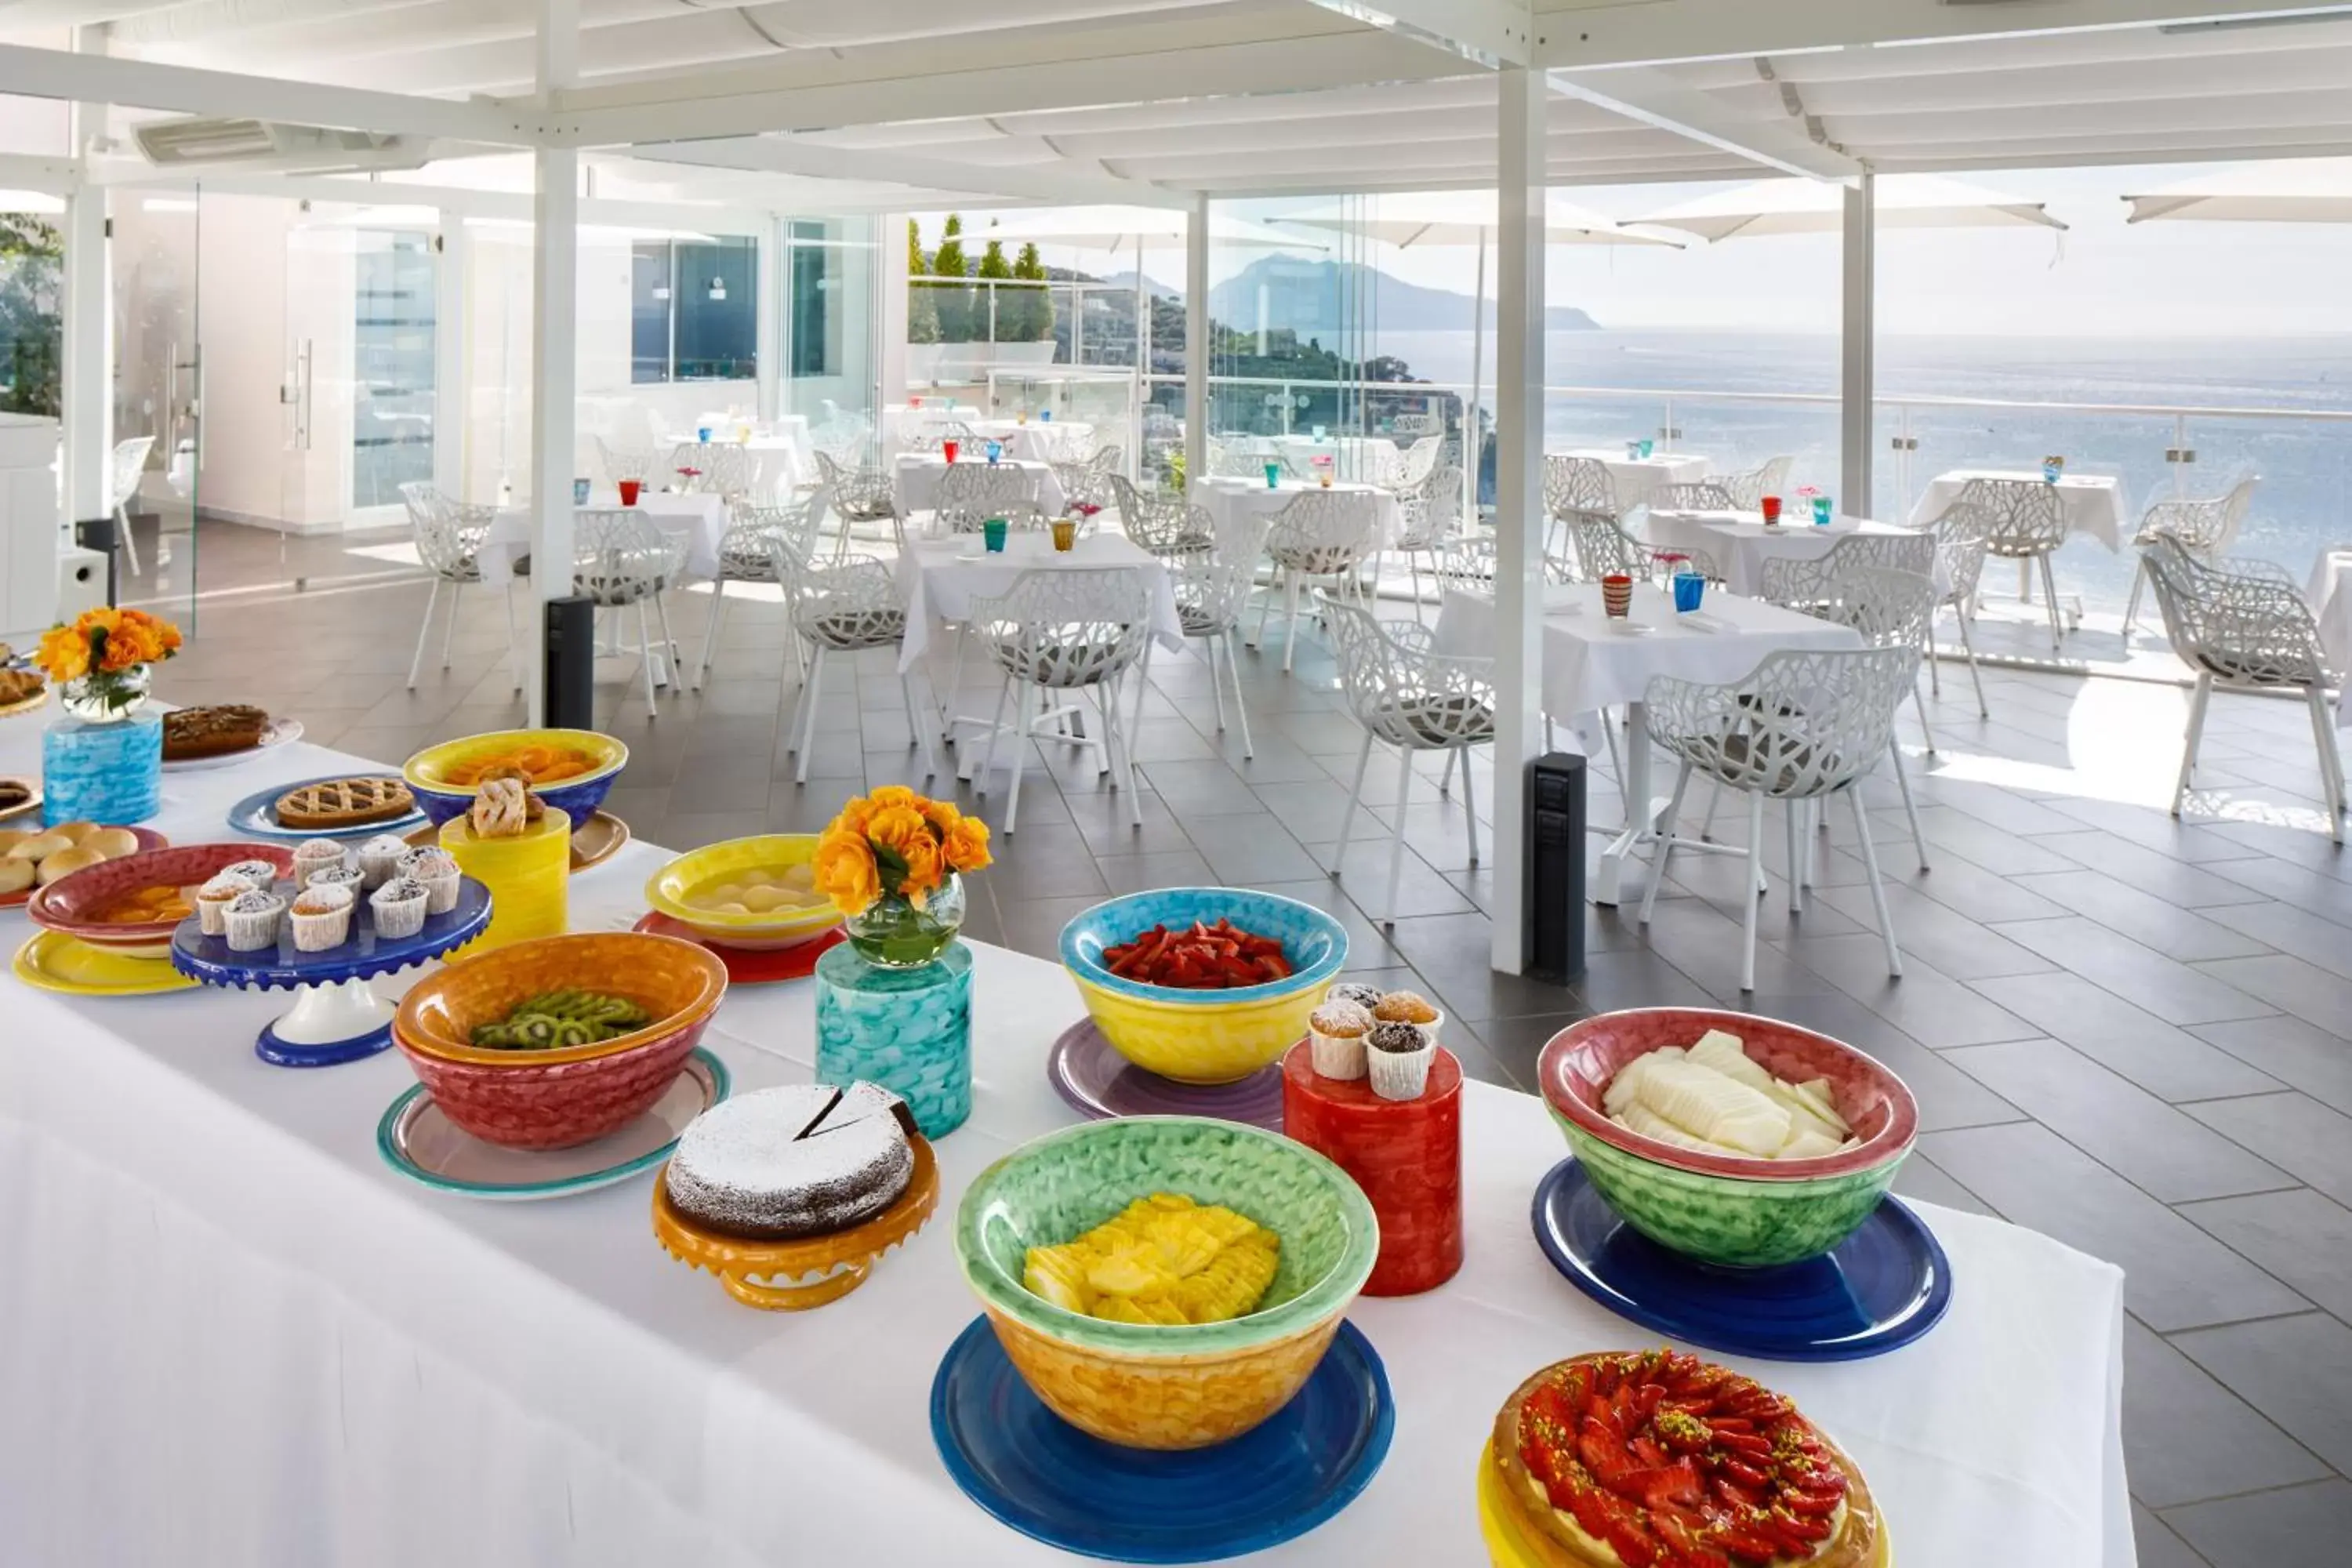 Buffet breakfast in Villa Fiorella Art Hotel